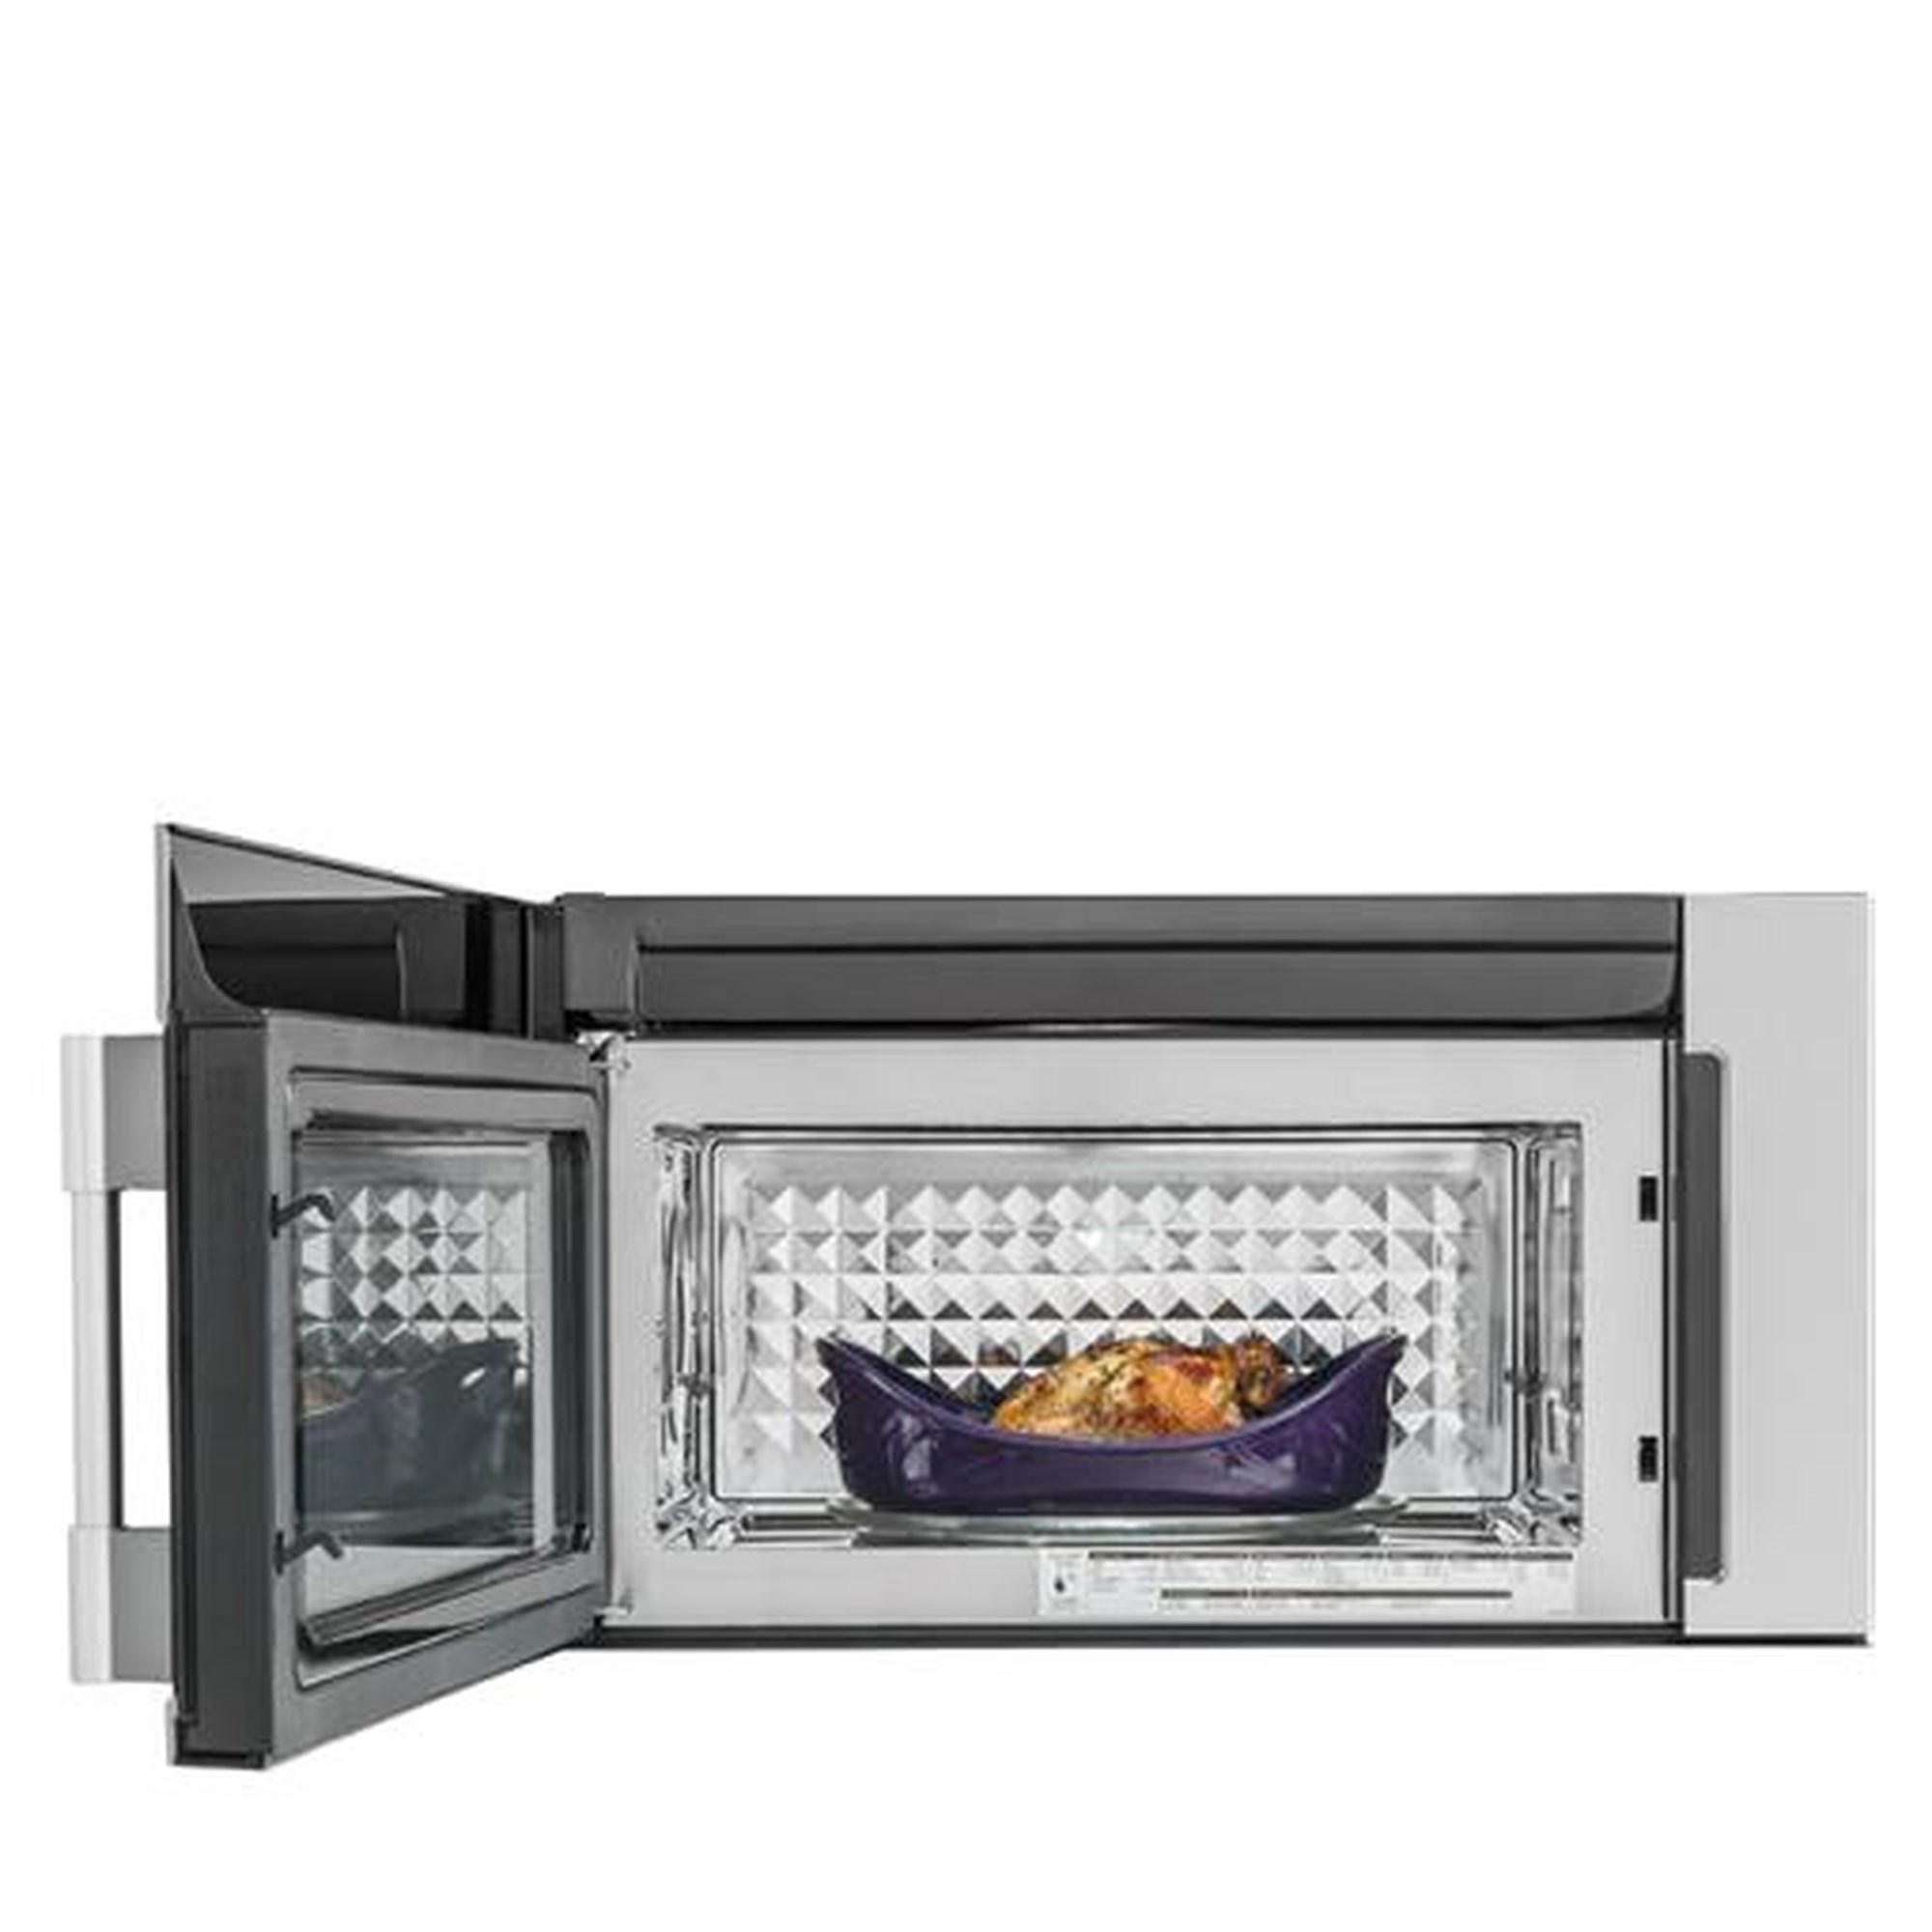 1.8 cu. ft. Countertop Microwave Oven